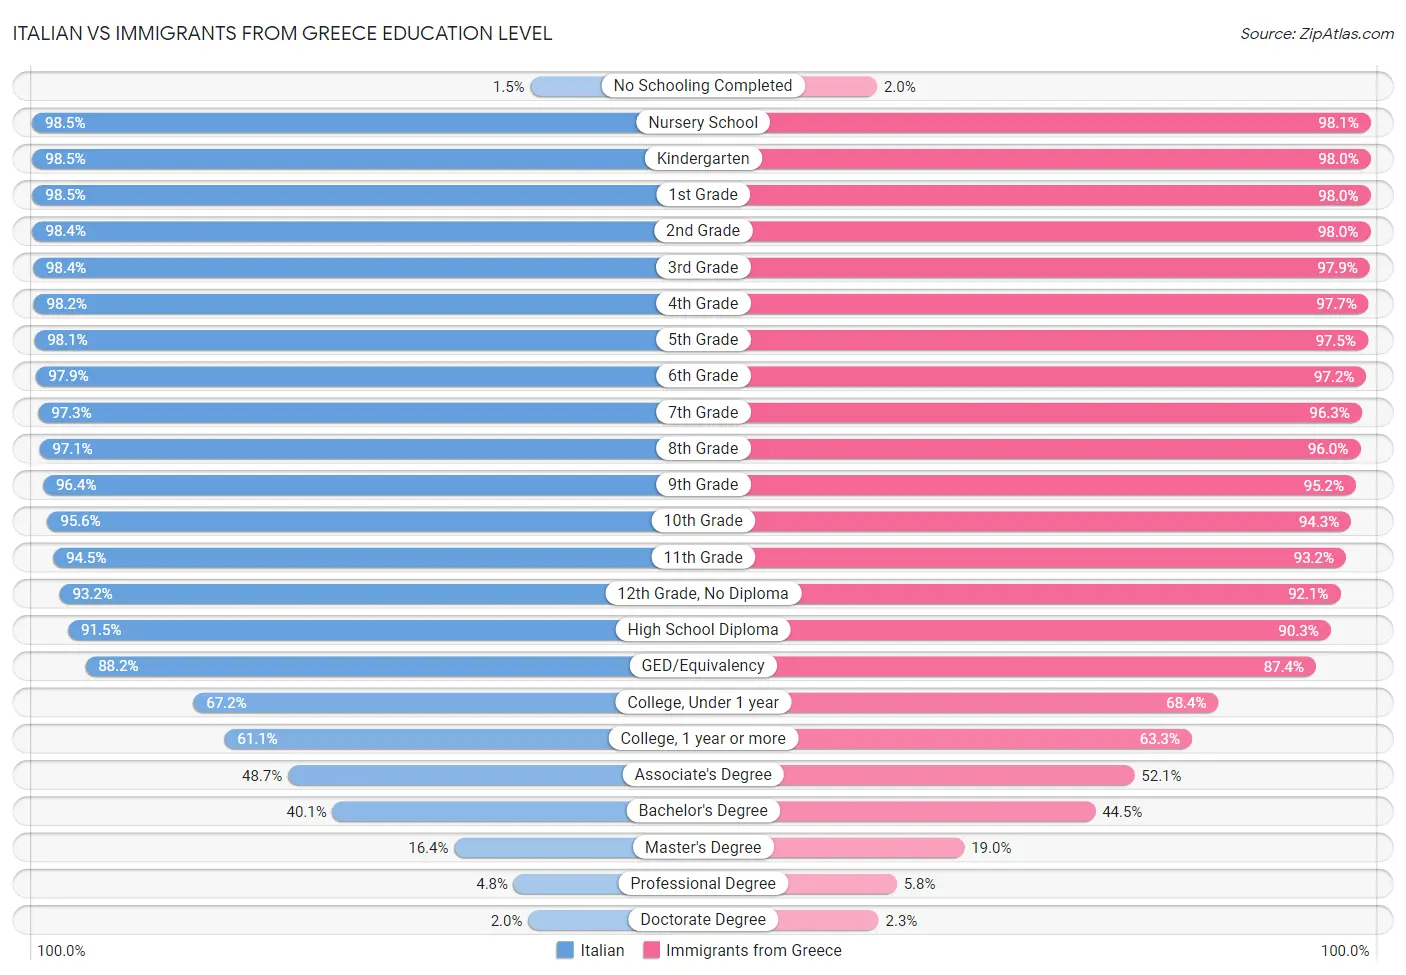 Italian vs Immigrants from Greece Education Level